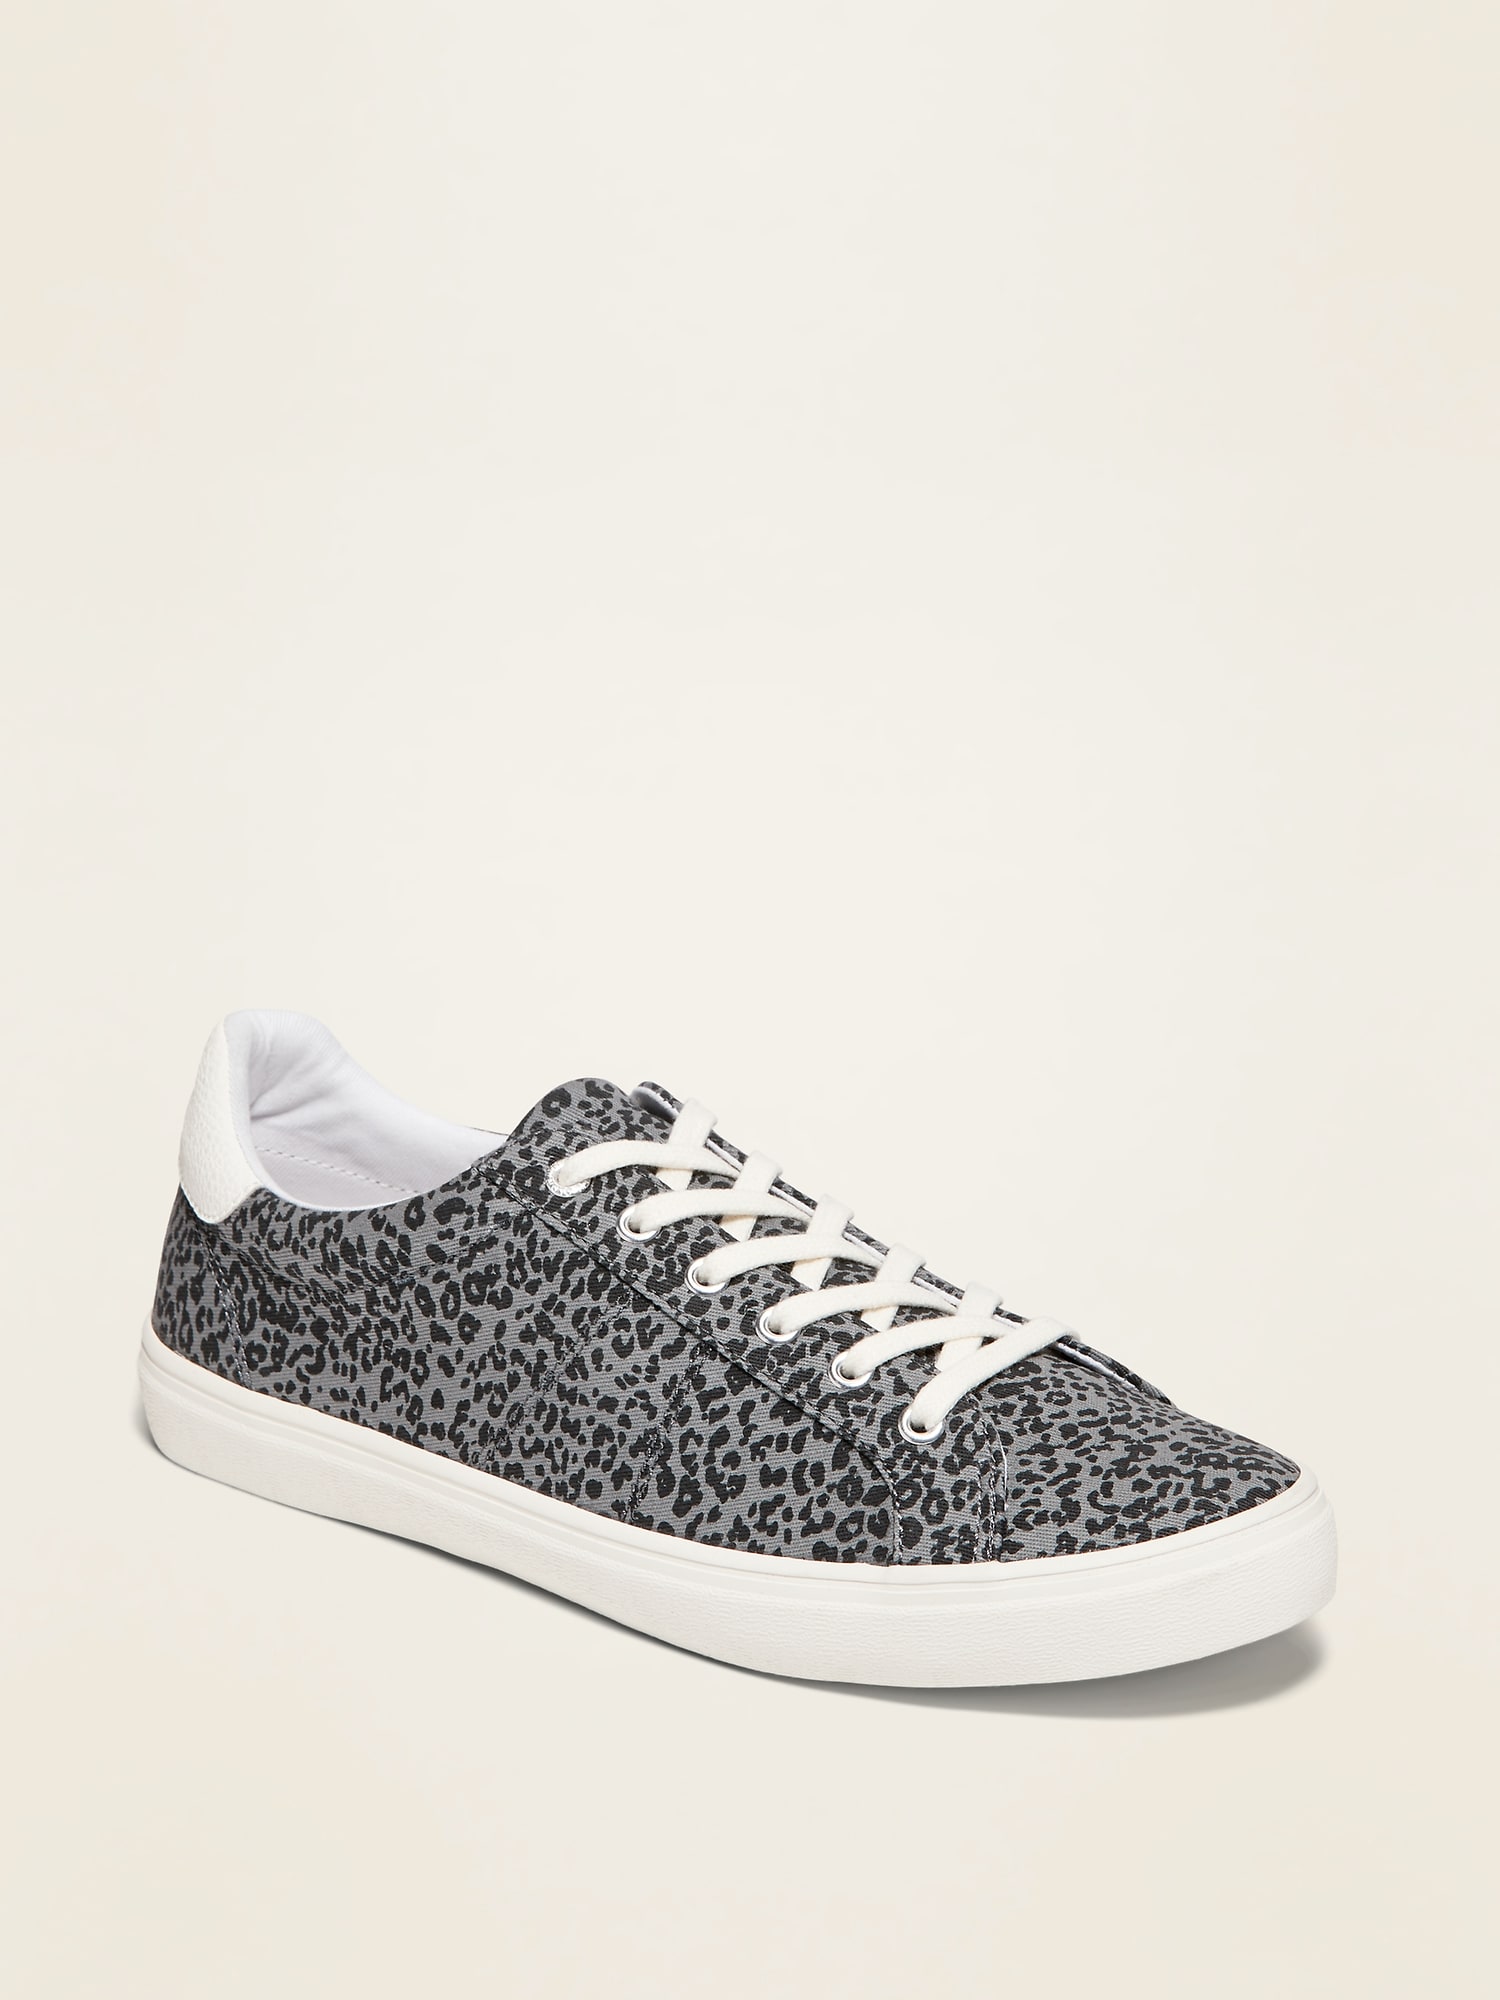 Leopard-Print Court Sneakers for Women 